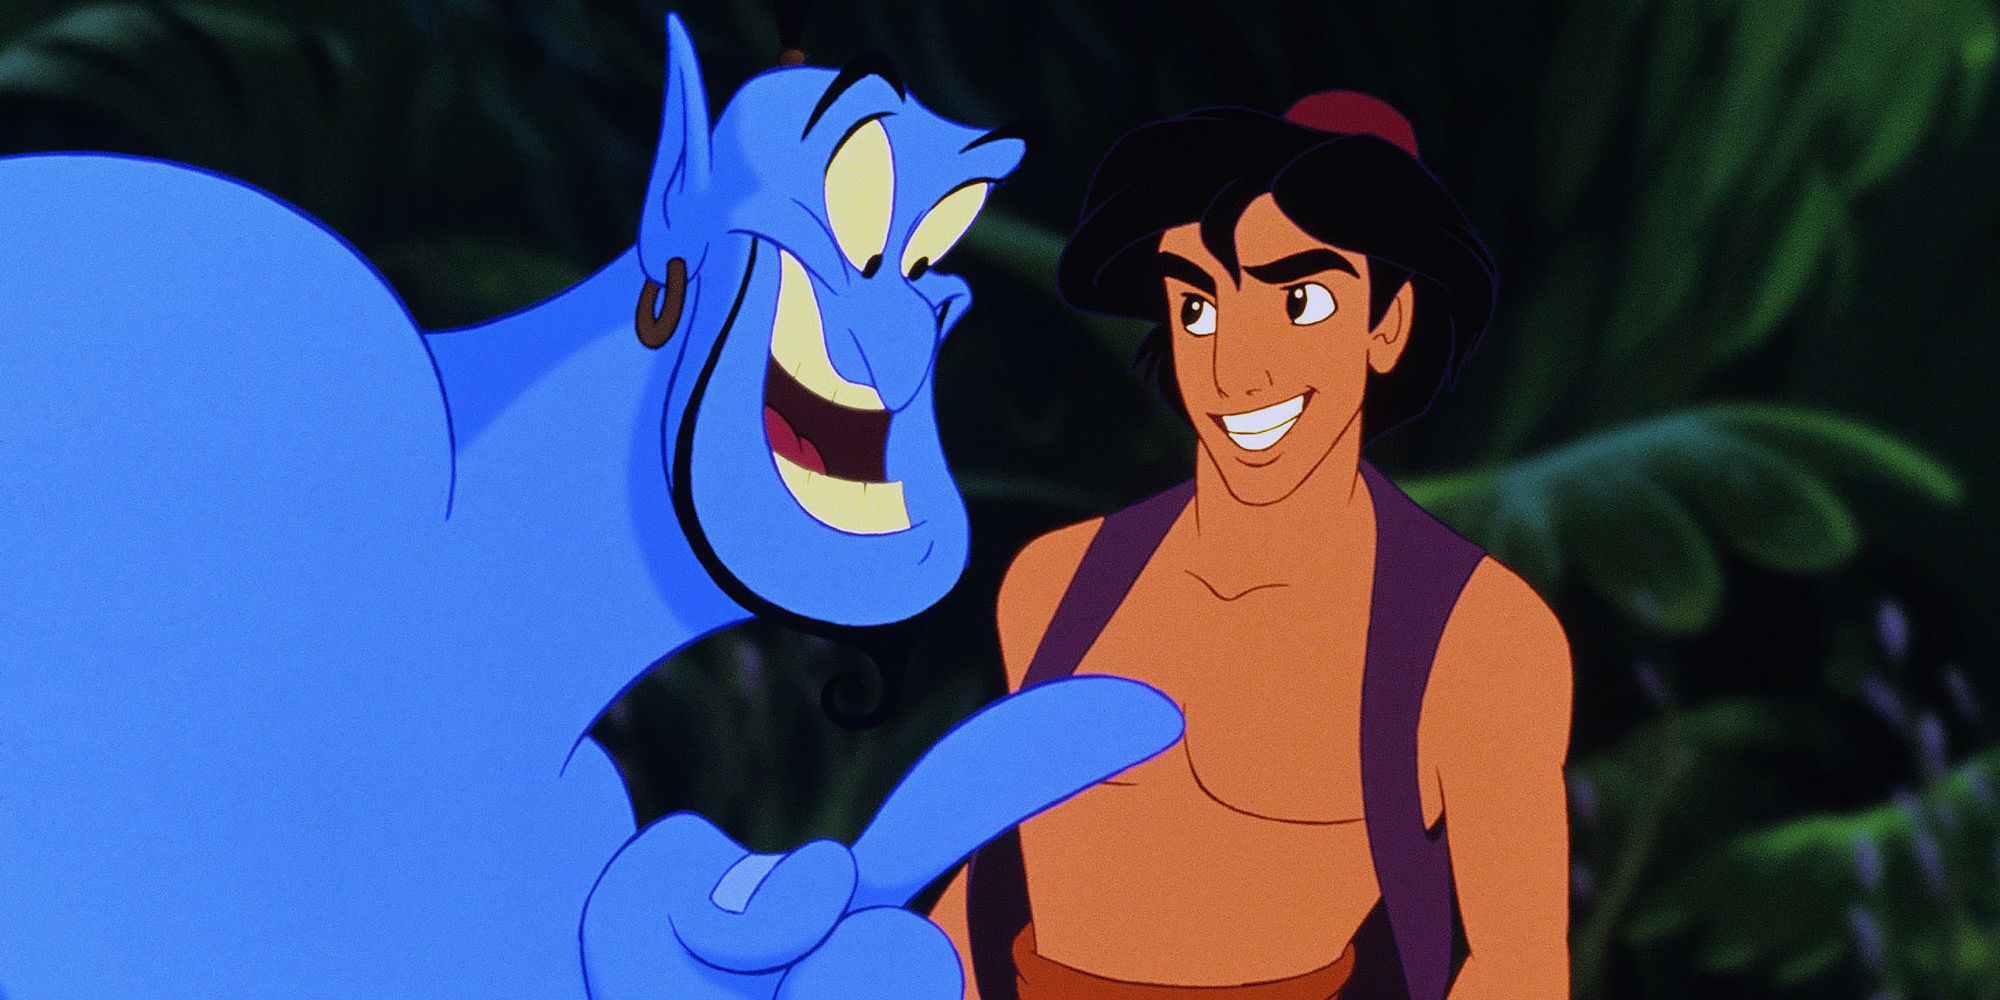 In Aladdin, Robin Williams as Genie, Scott Weinger as Aladdin